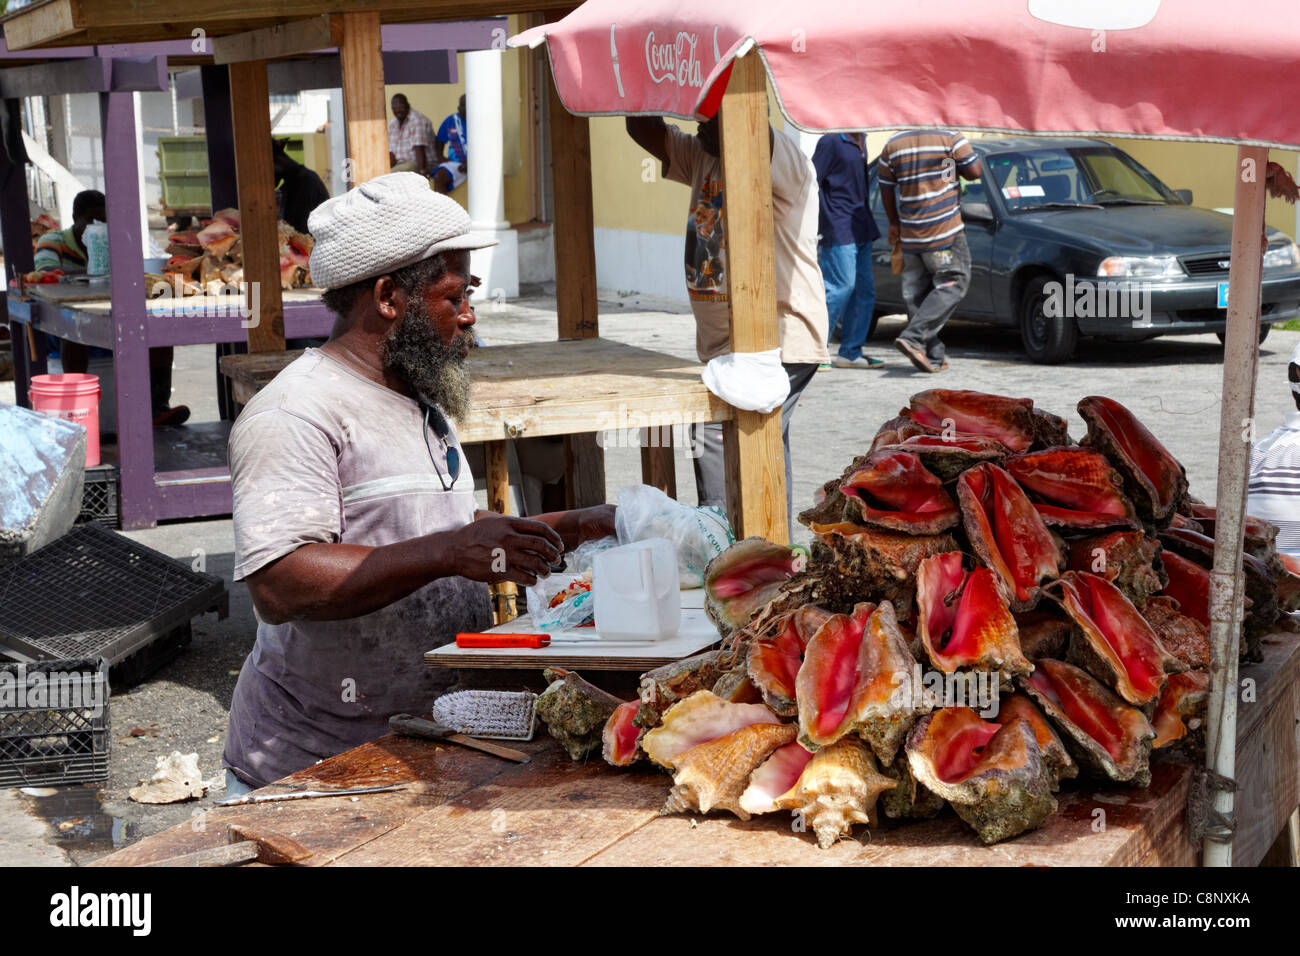 Man selling fresh conch, Potters Cay, Nassau, New Providence Island, Bahamas, Caribbean Stock Photo